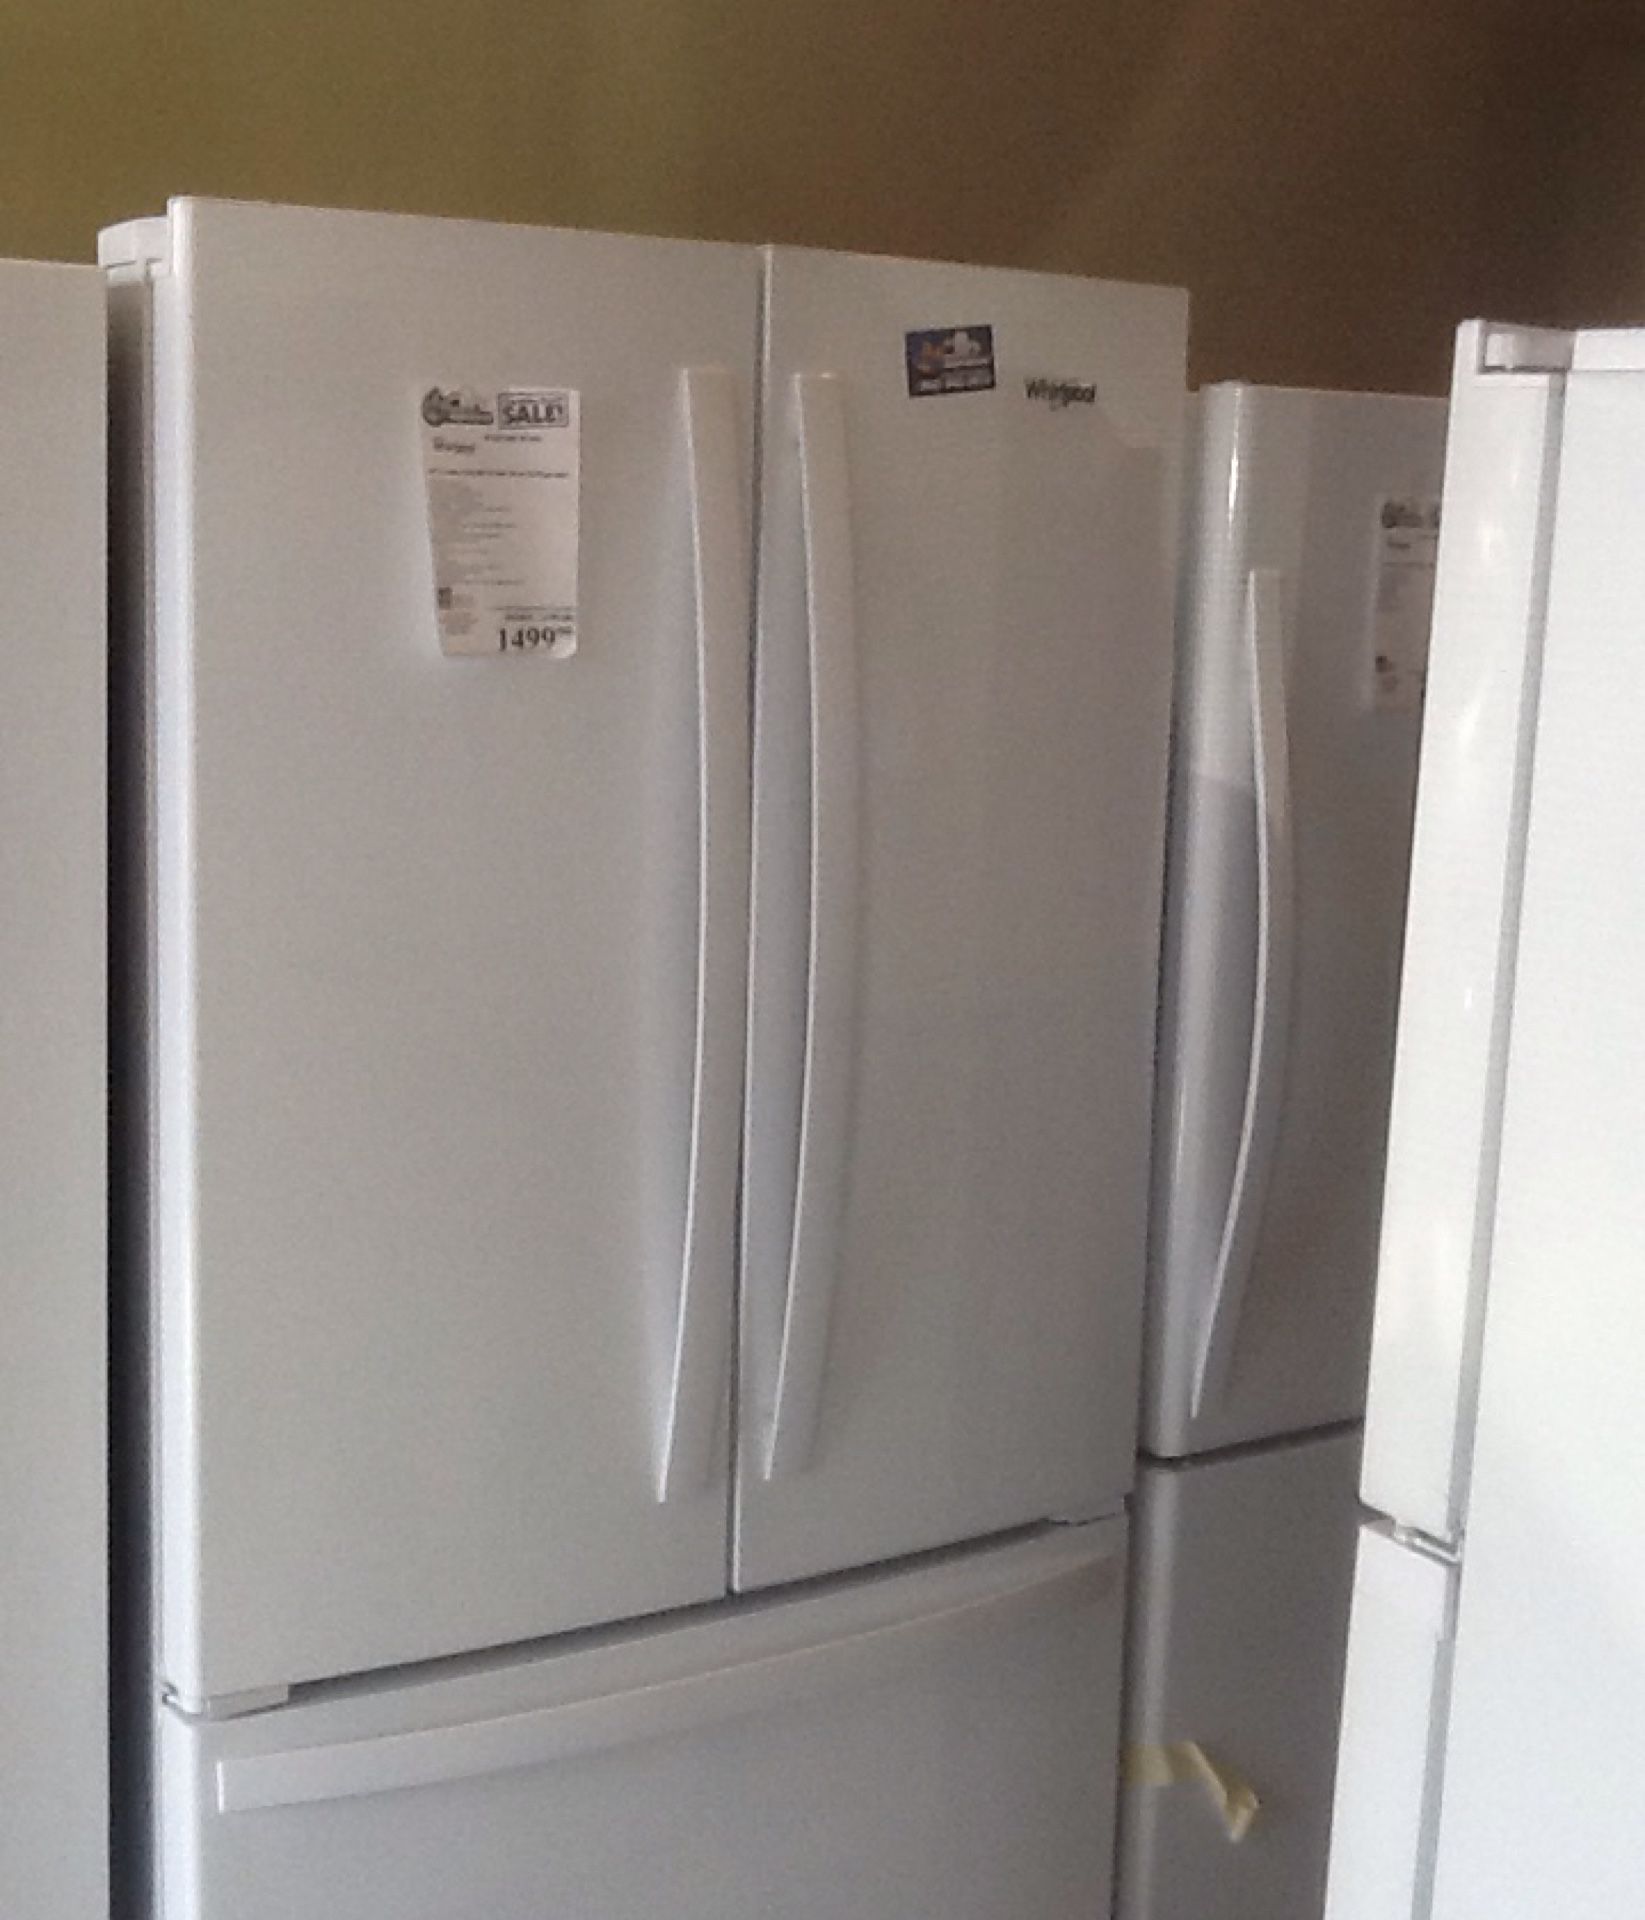 New open box whirlpool refrigerator WRF540CWHW